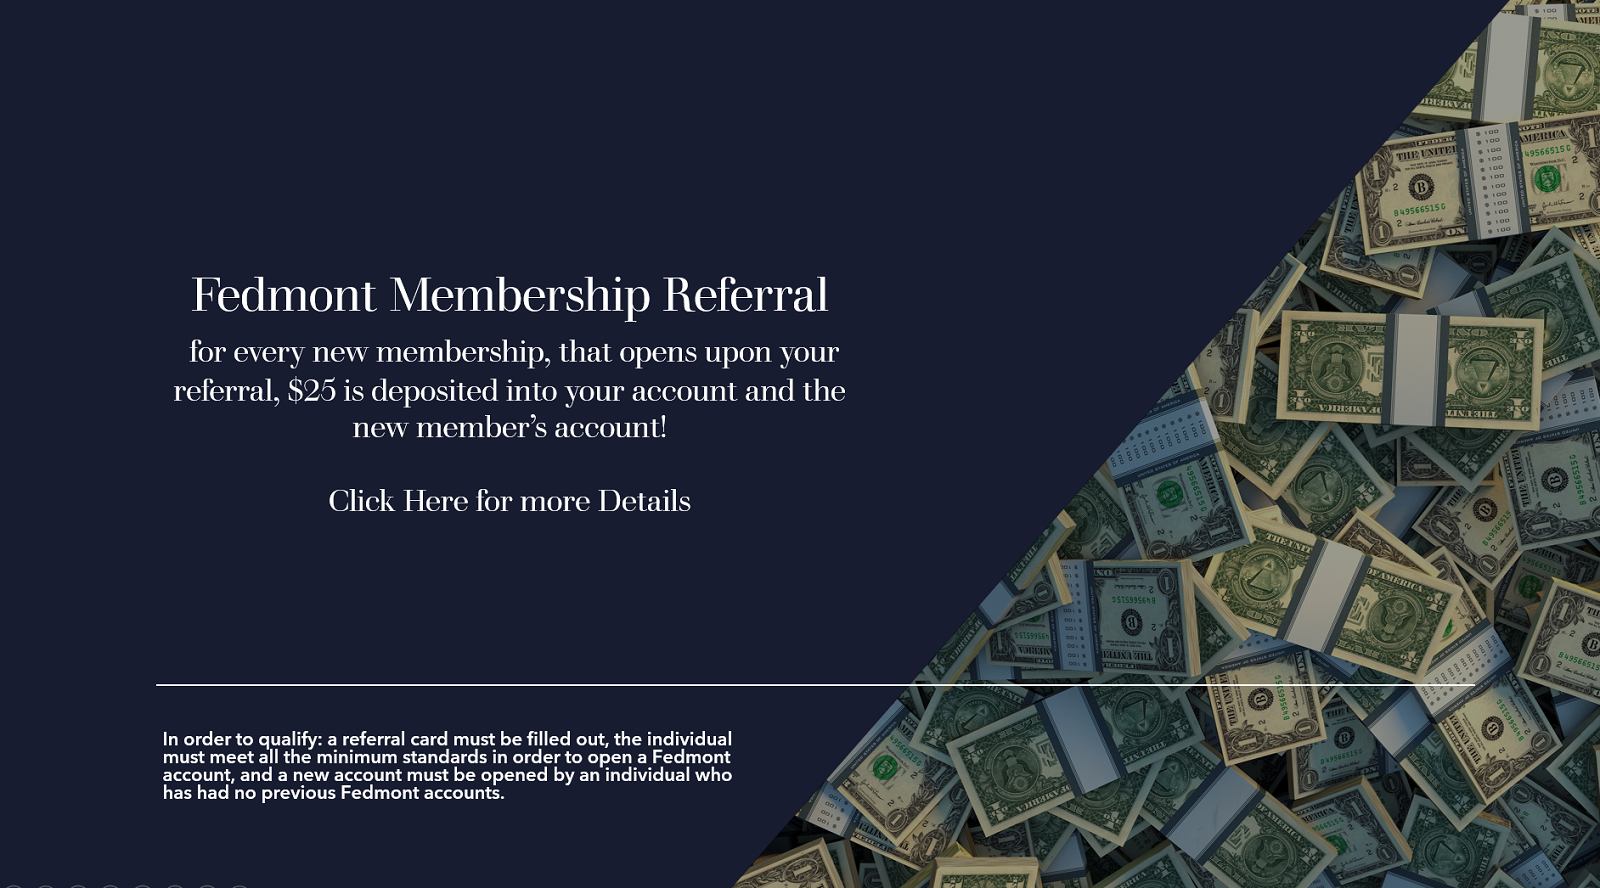 Membership referral image slide